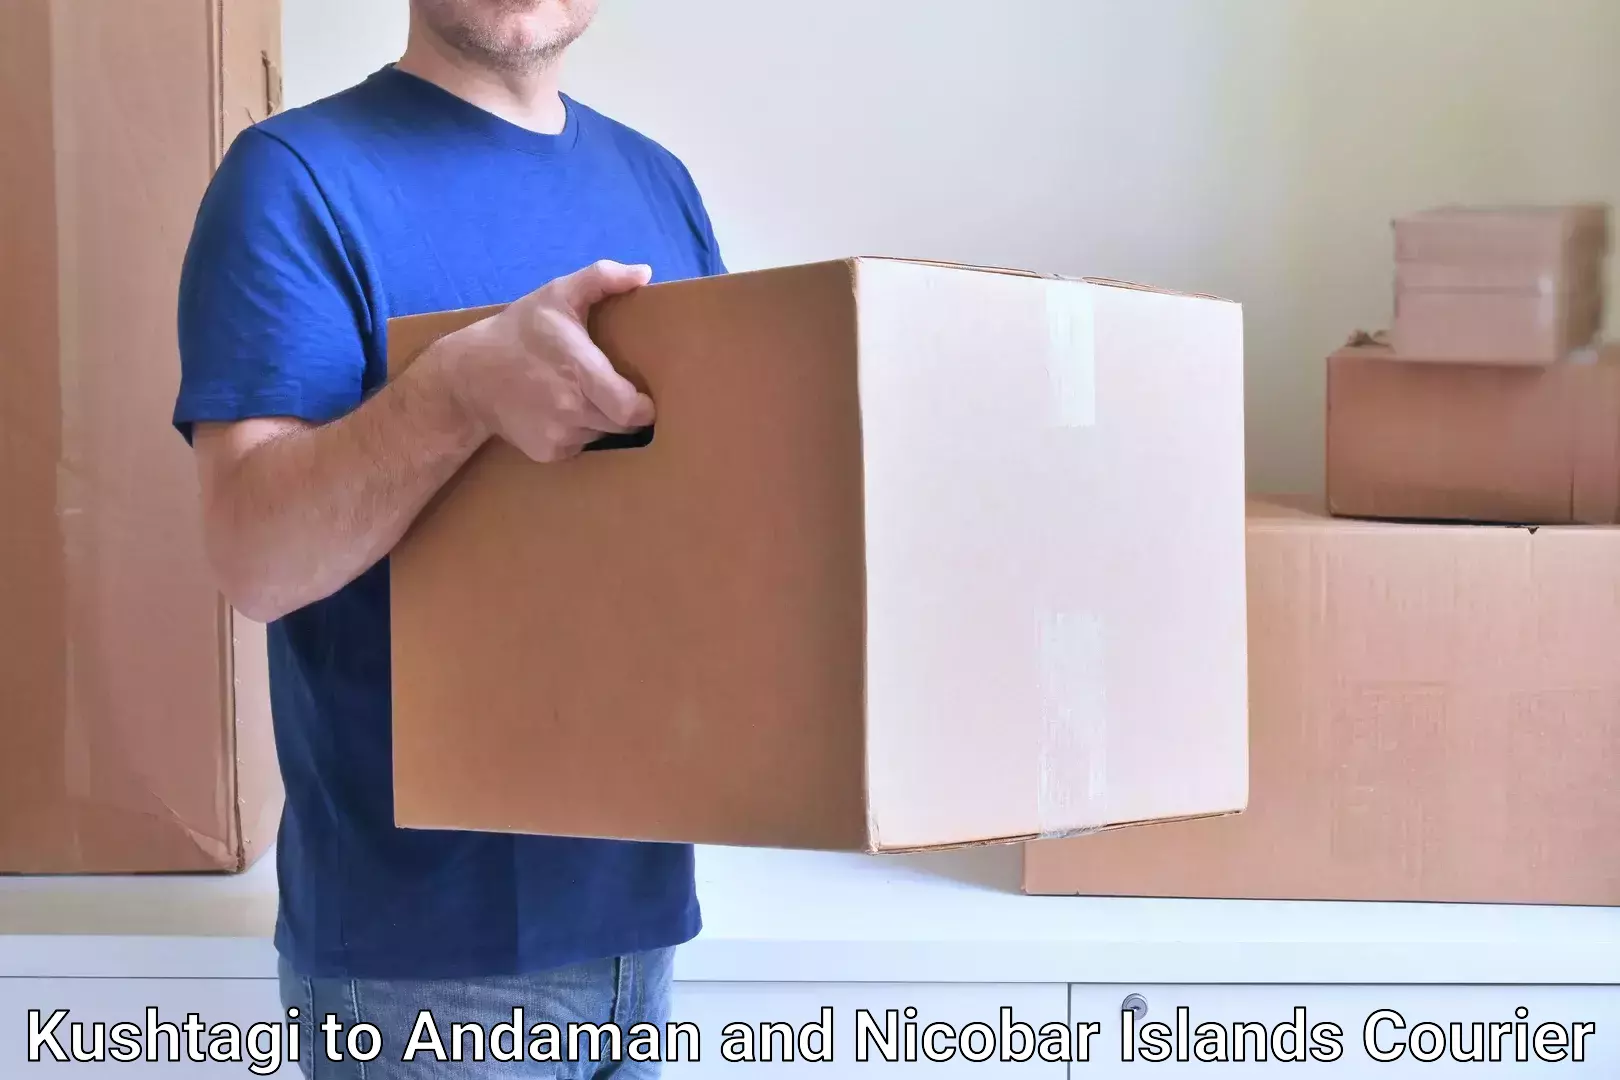 Shipping and handling in Kushtagi to Andaman and Nicobar Islands